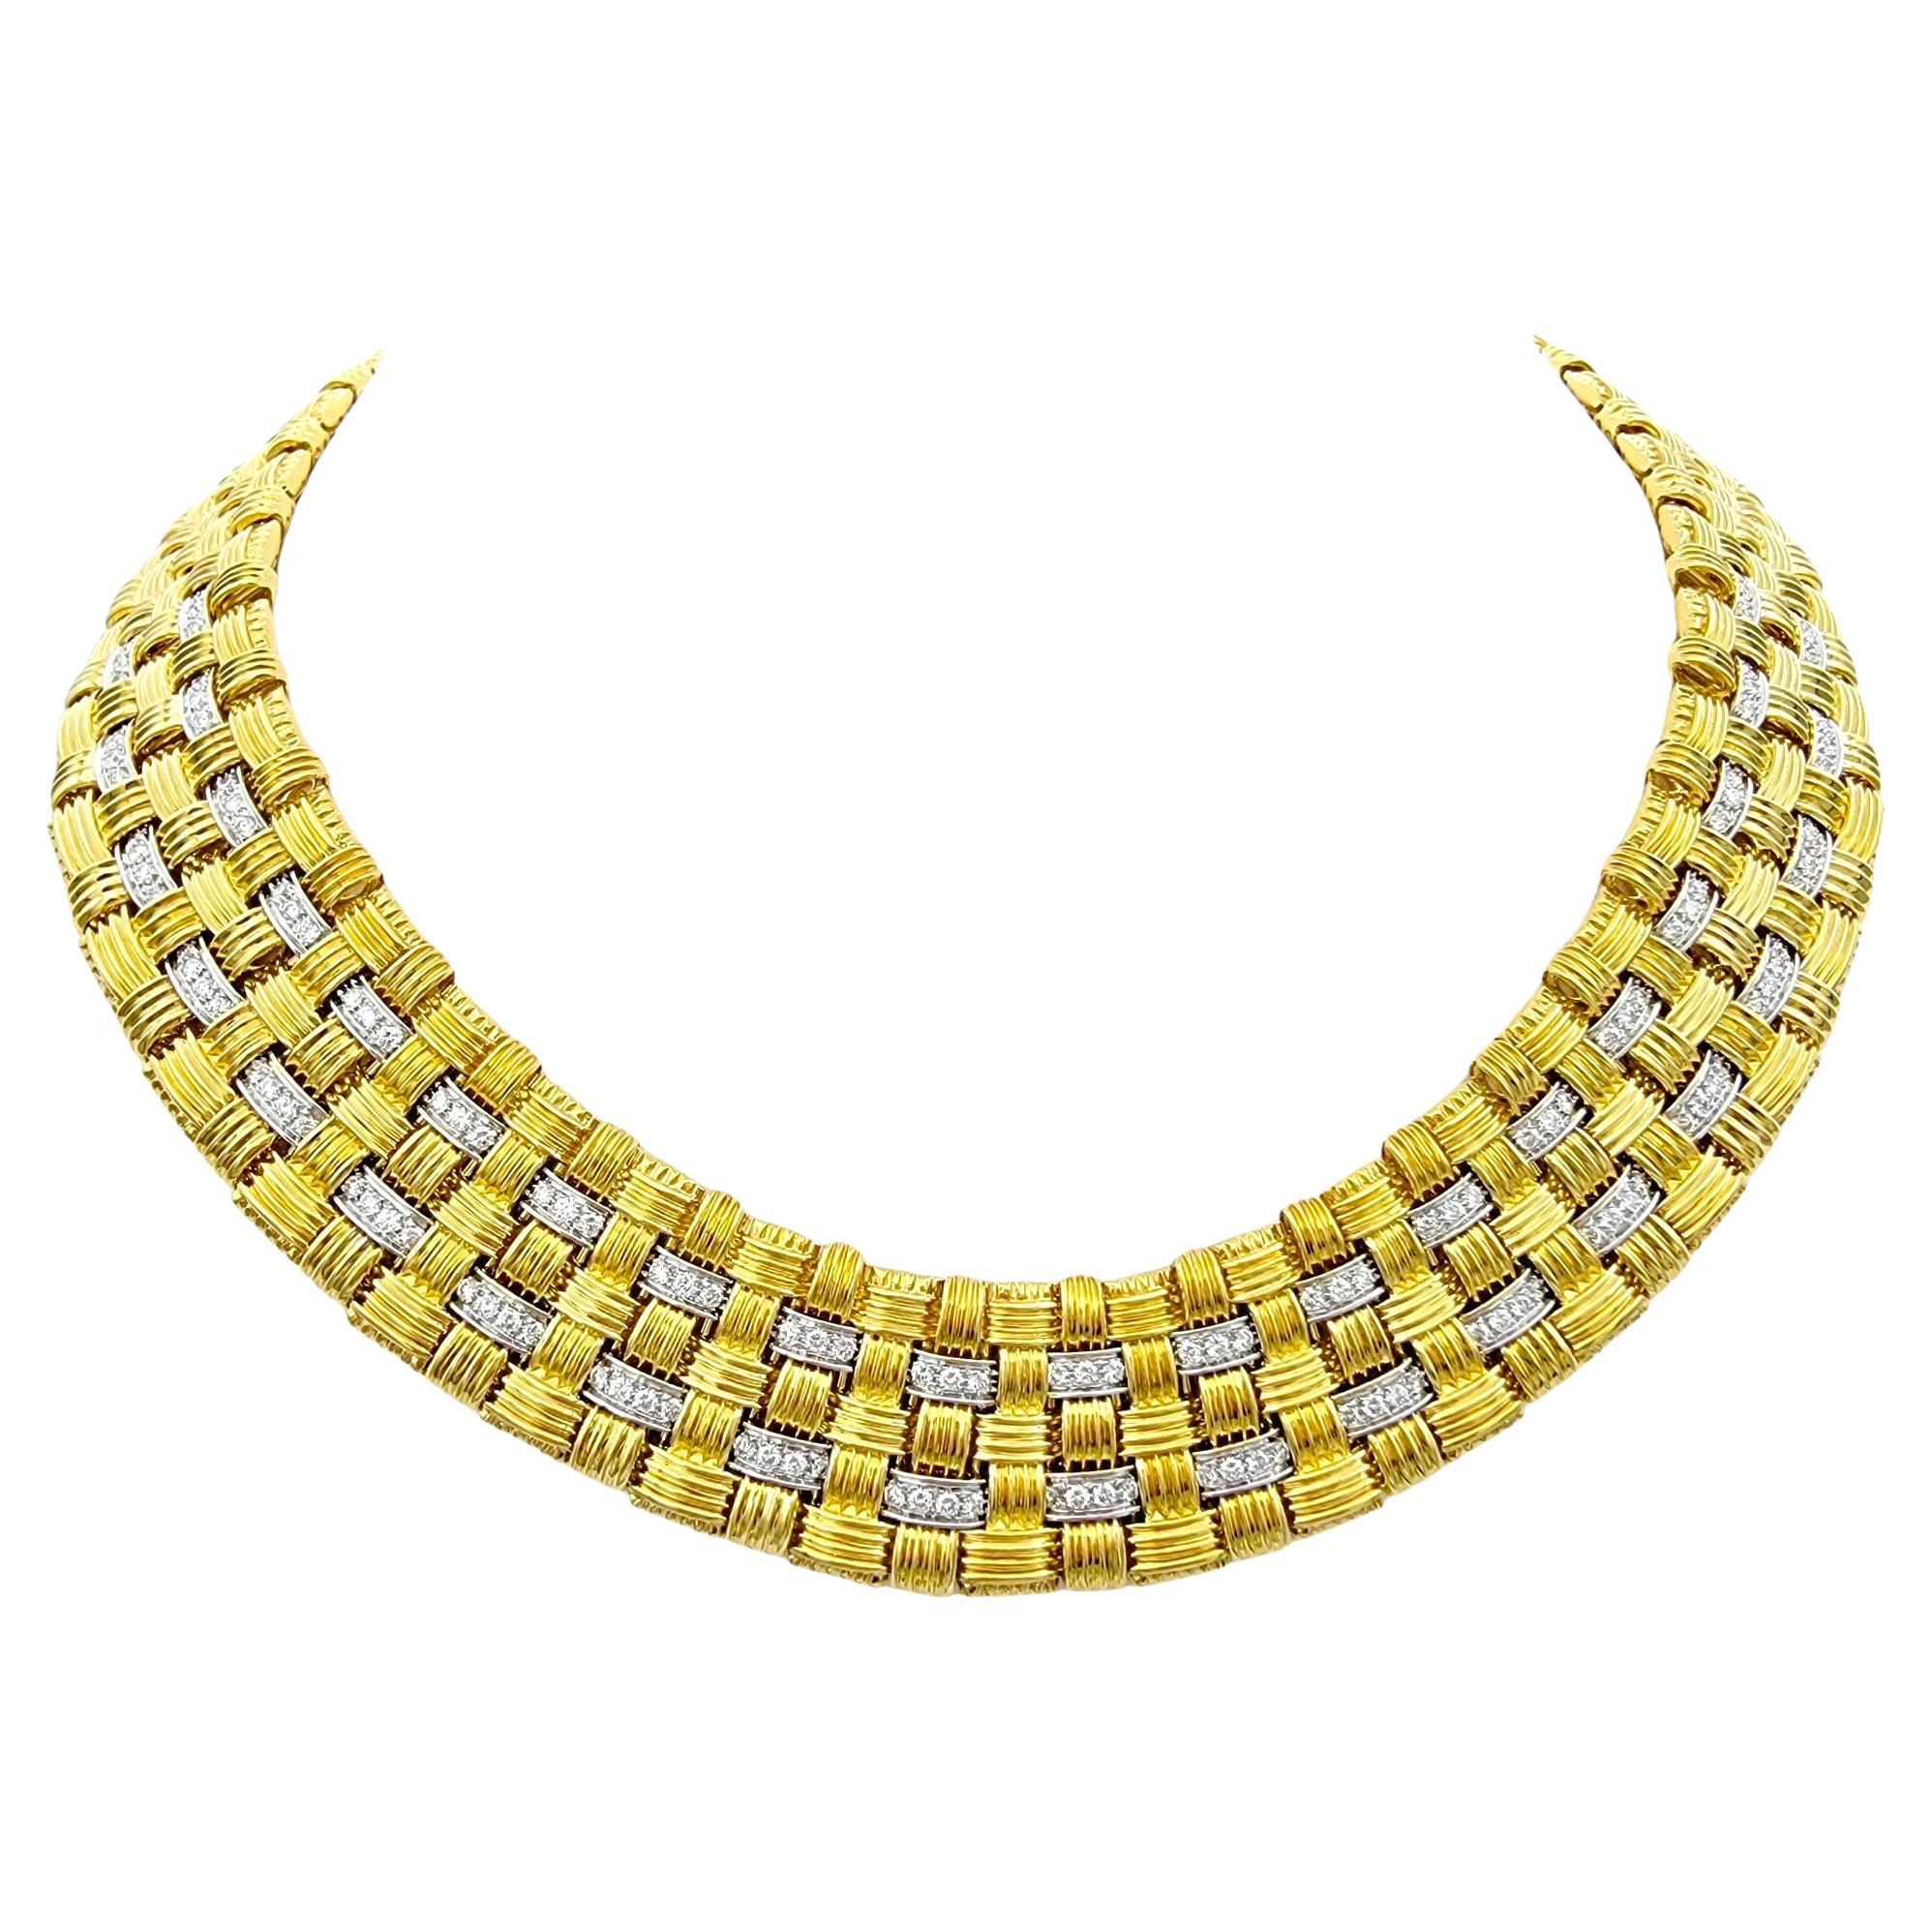 Roberto Coin Appassionata Diamond Basket Weave Collar Necklace in 18 Karat Gold